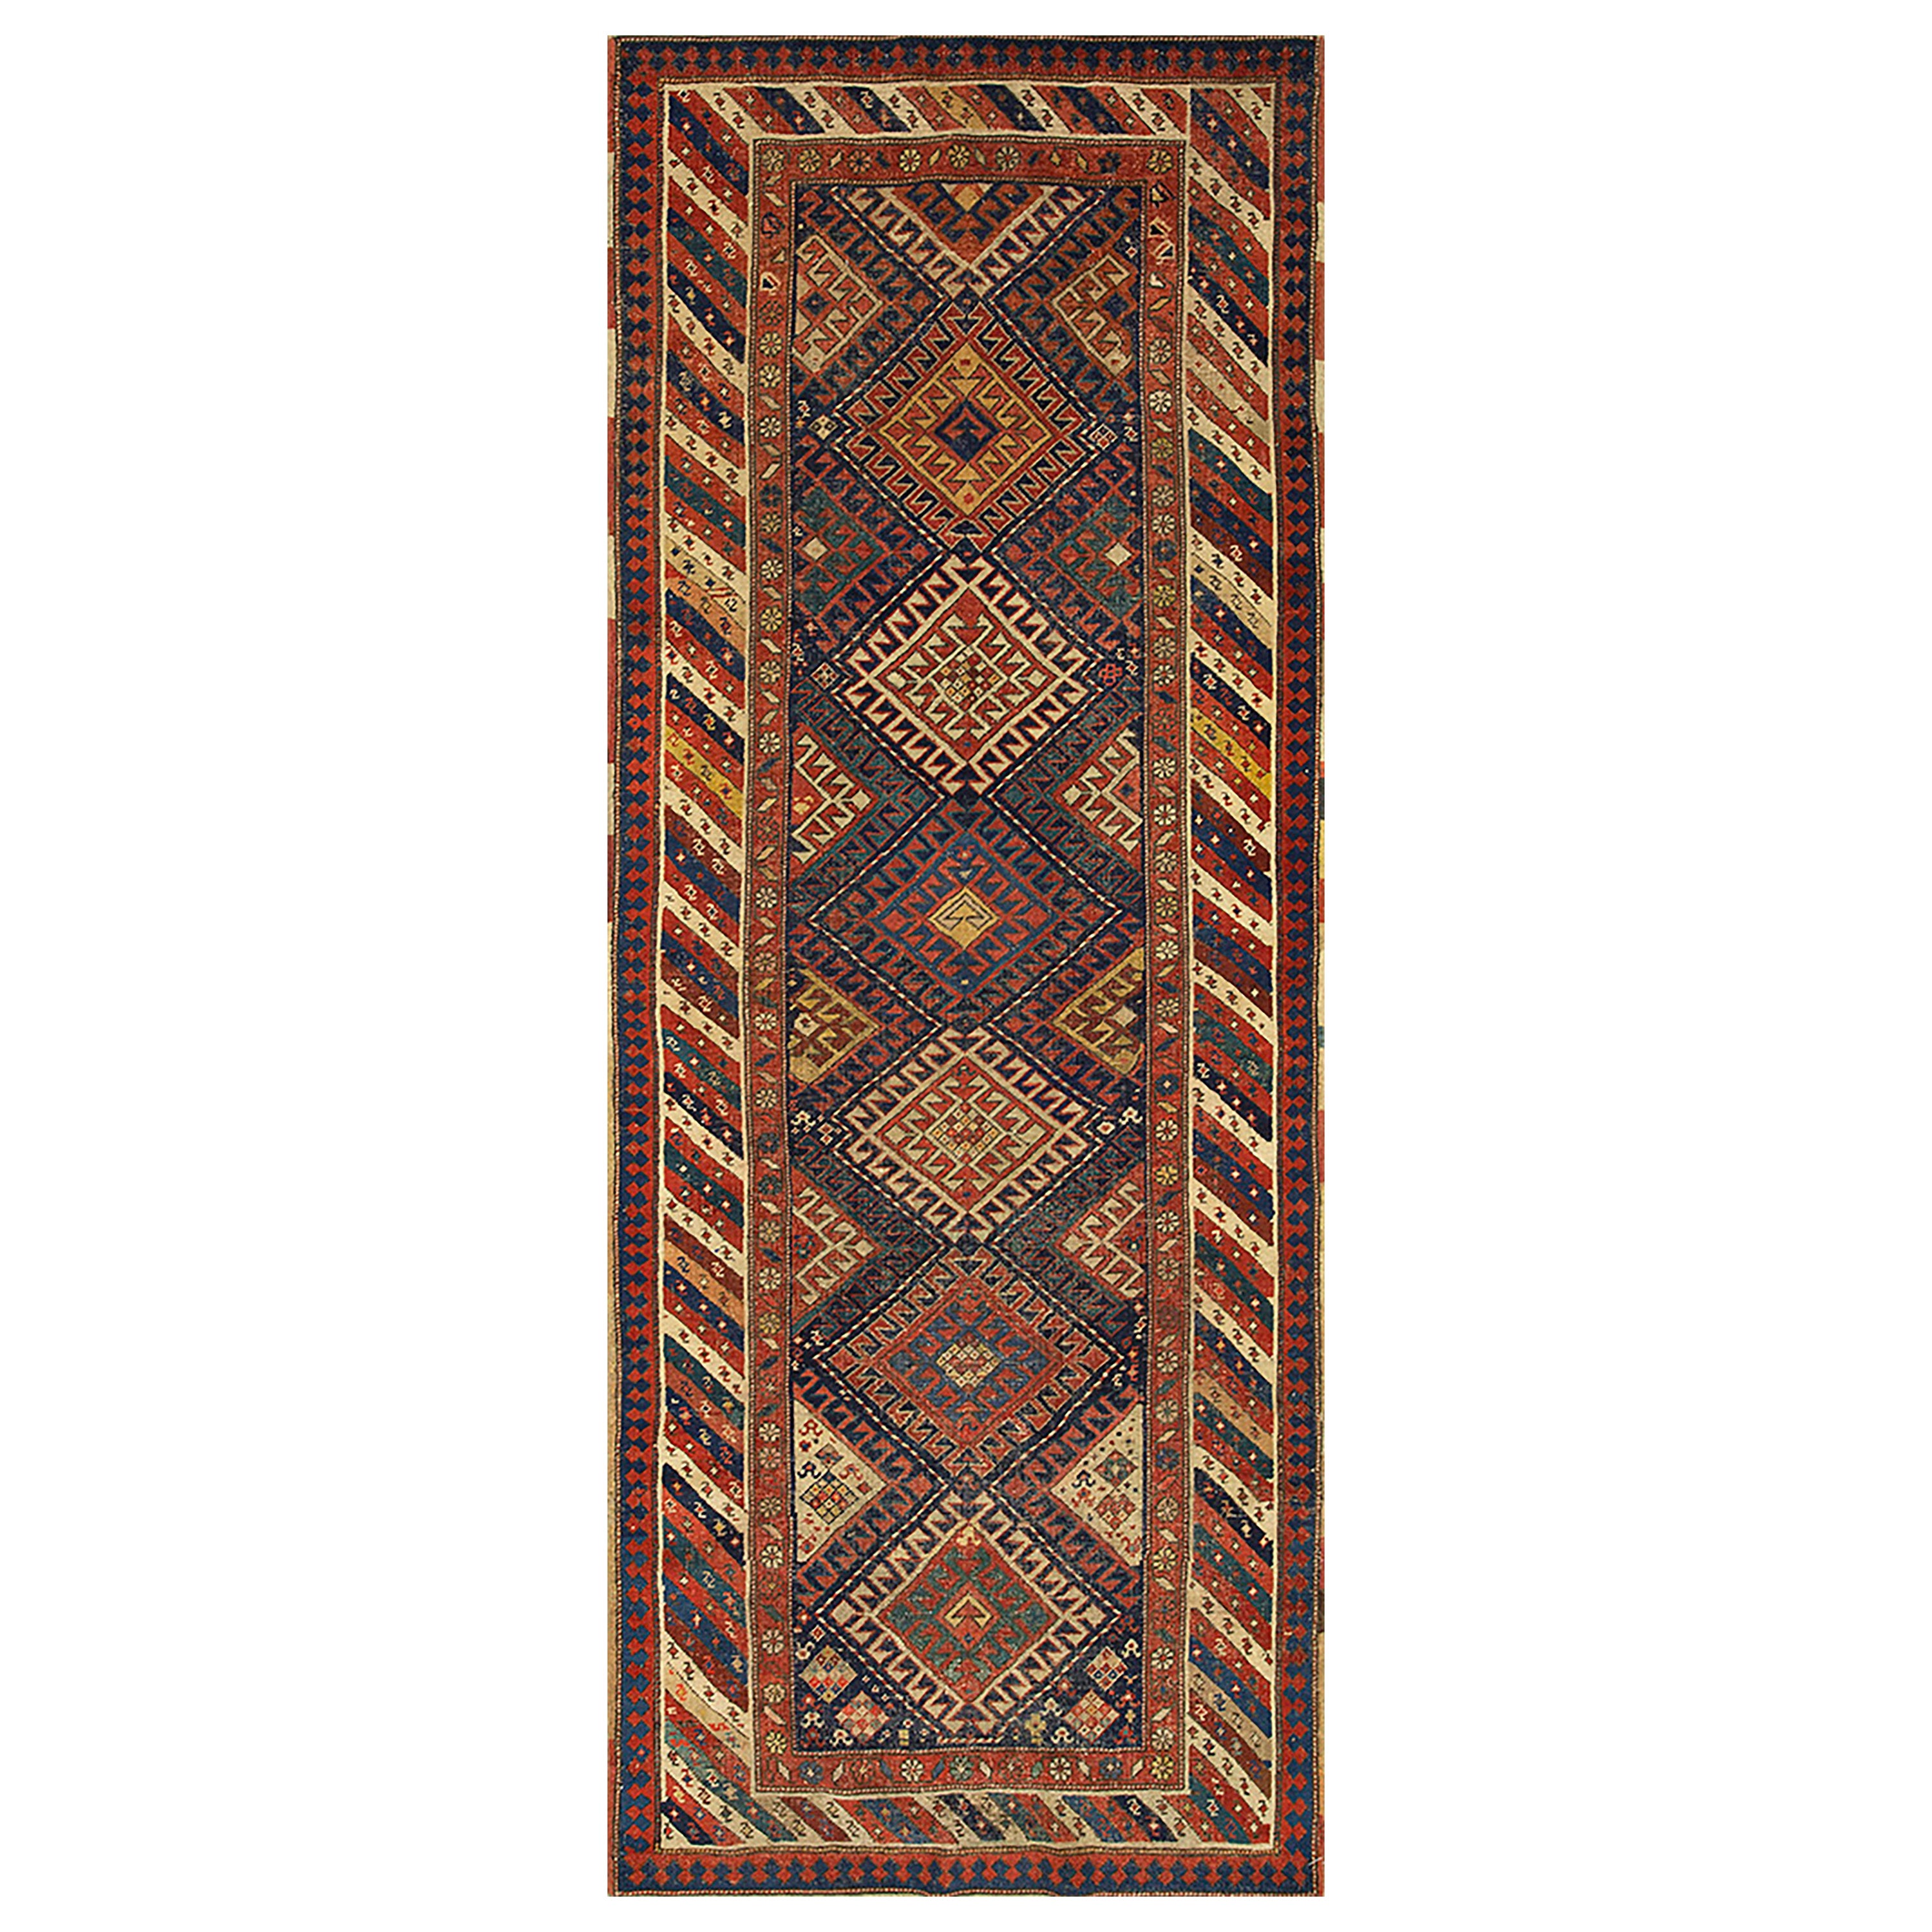 Early 20th Century N.W. Persian Runner Carpet